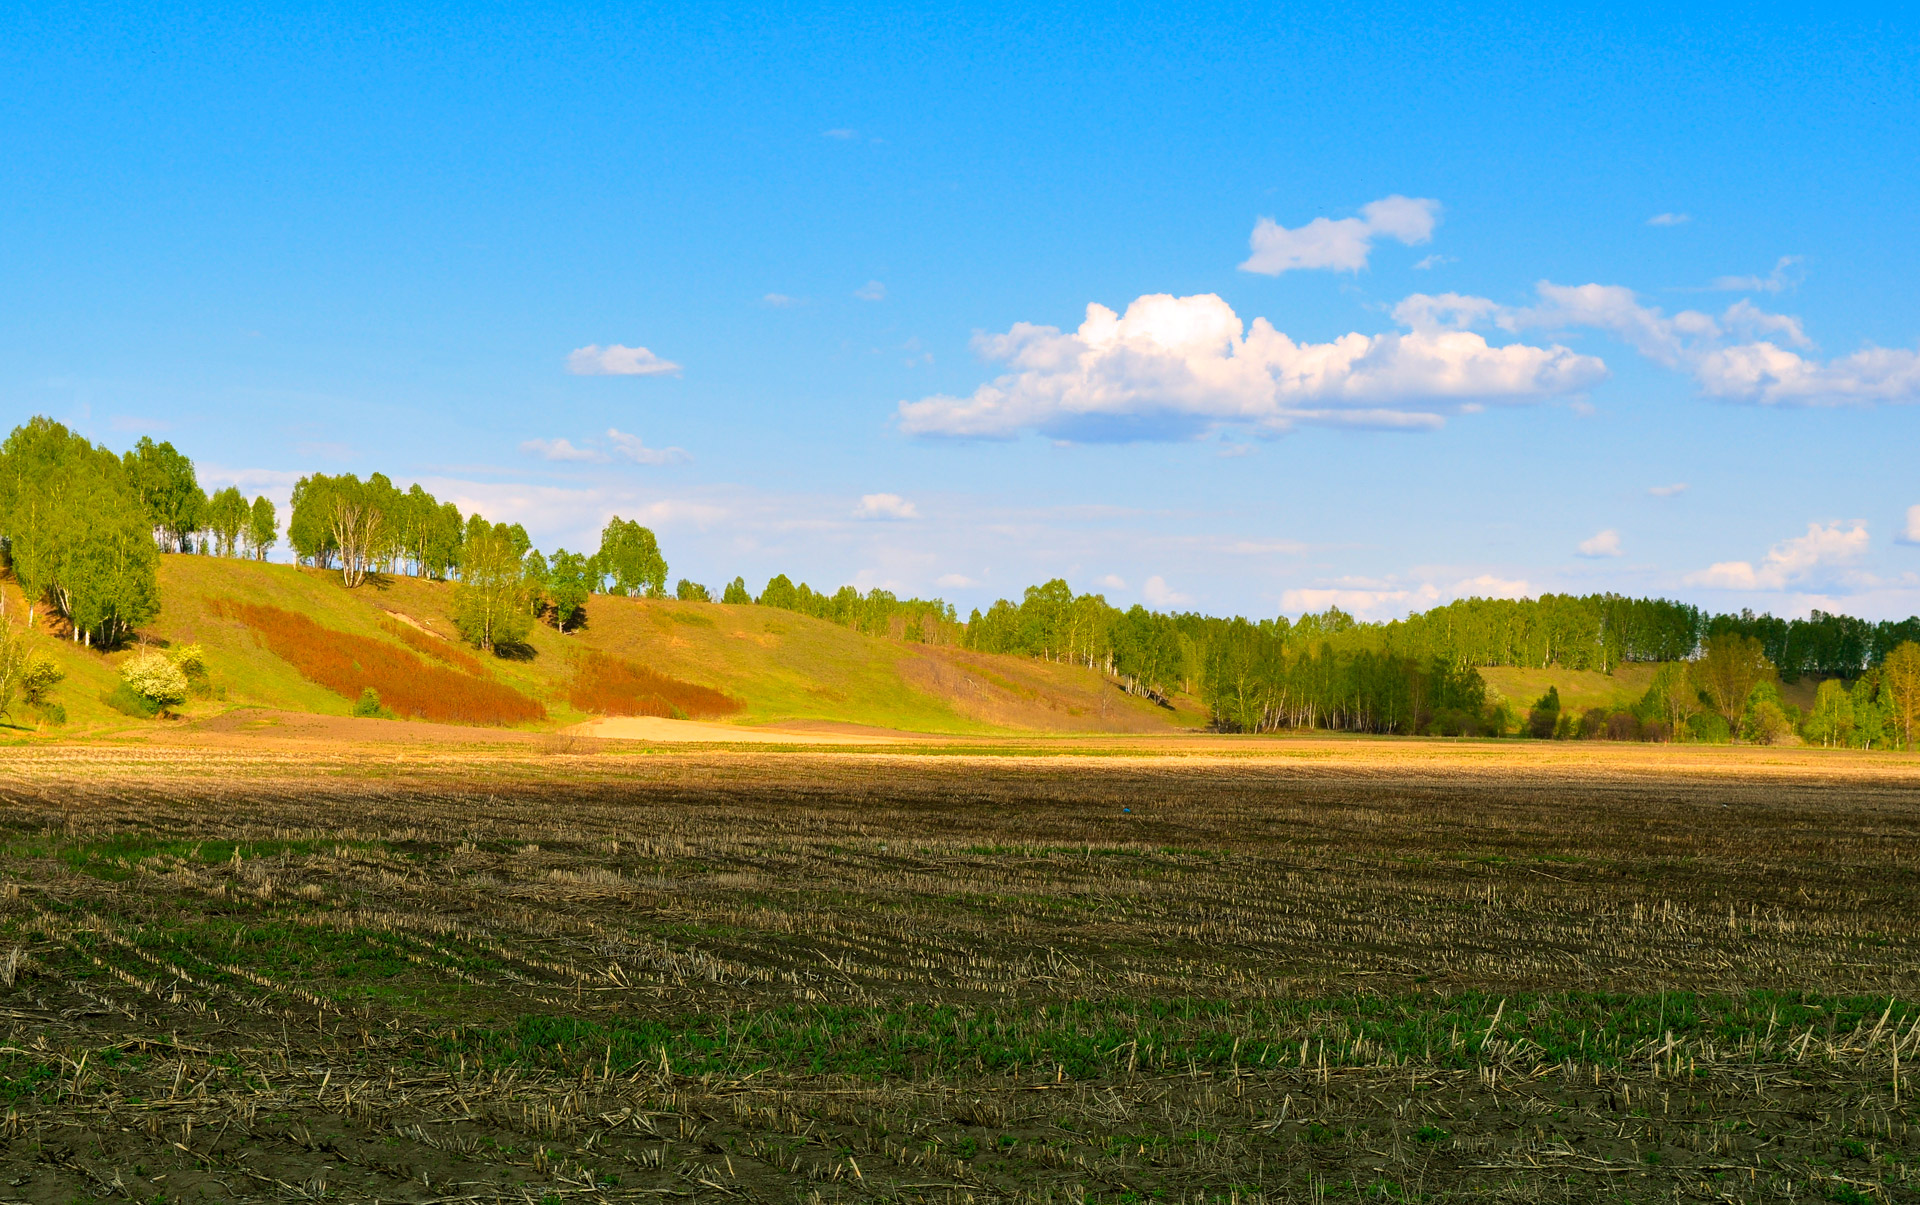 Rural Field